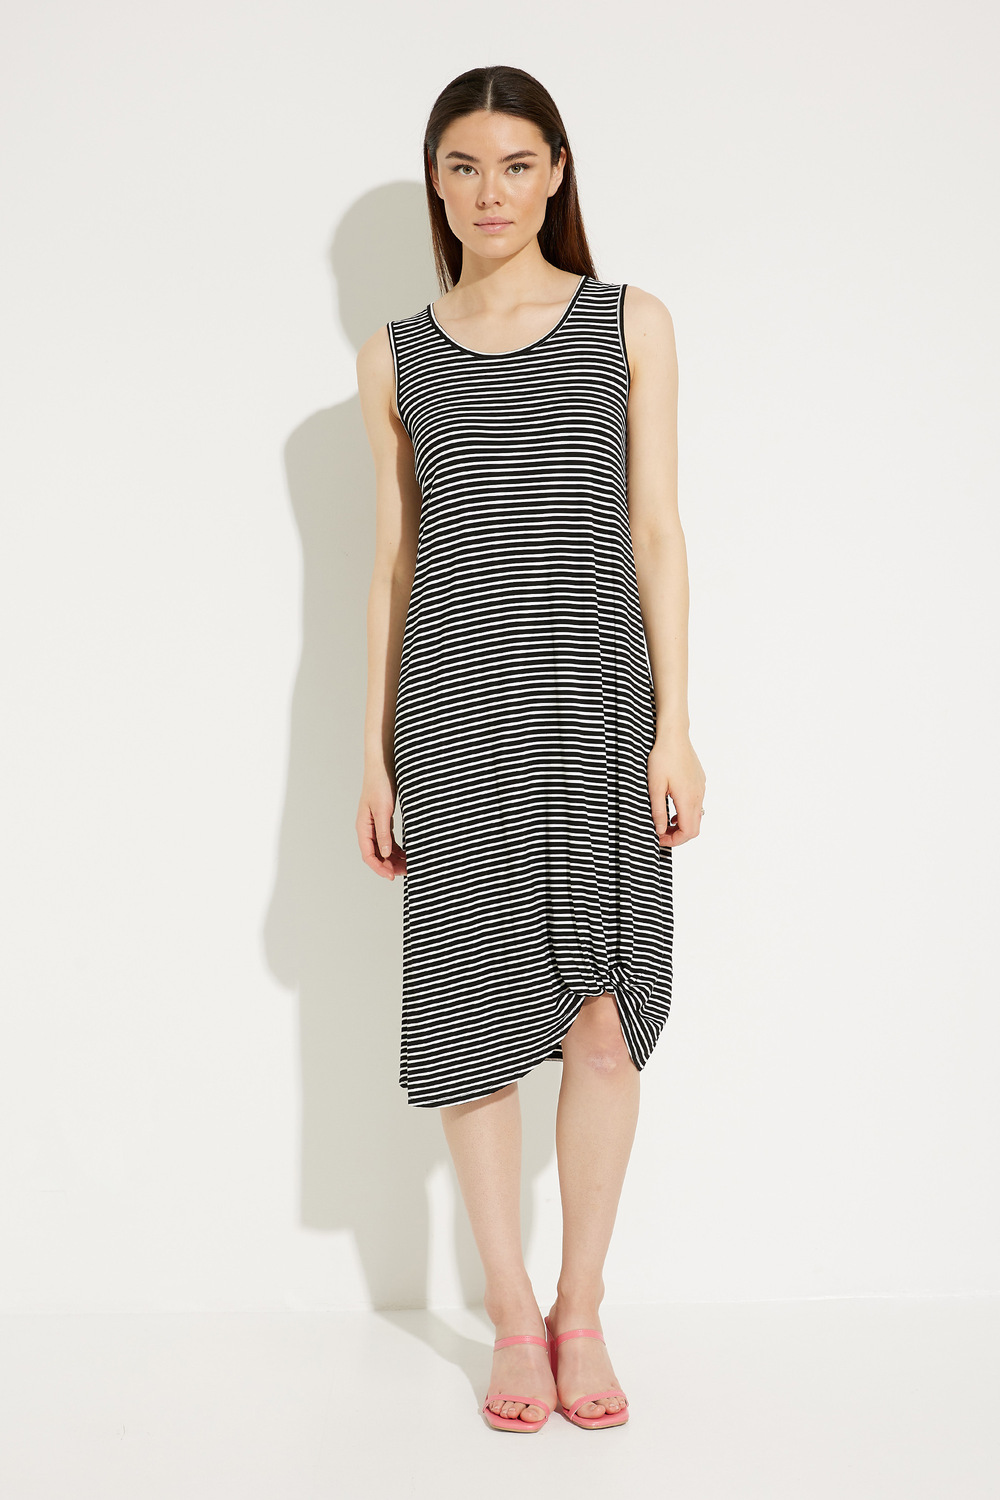 Striped Stretch Dress Style C3141. Black/ White